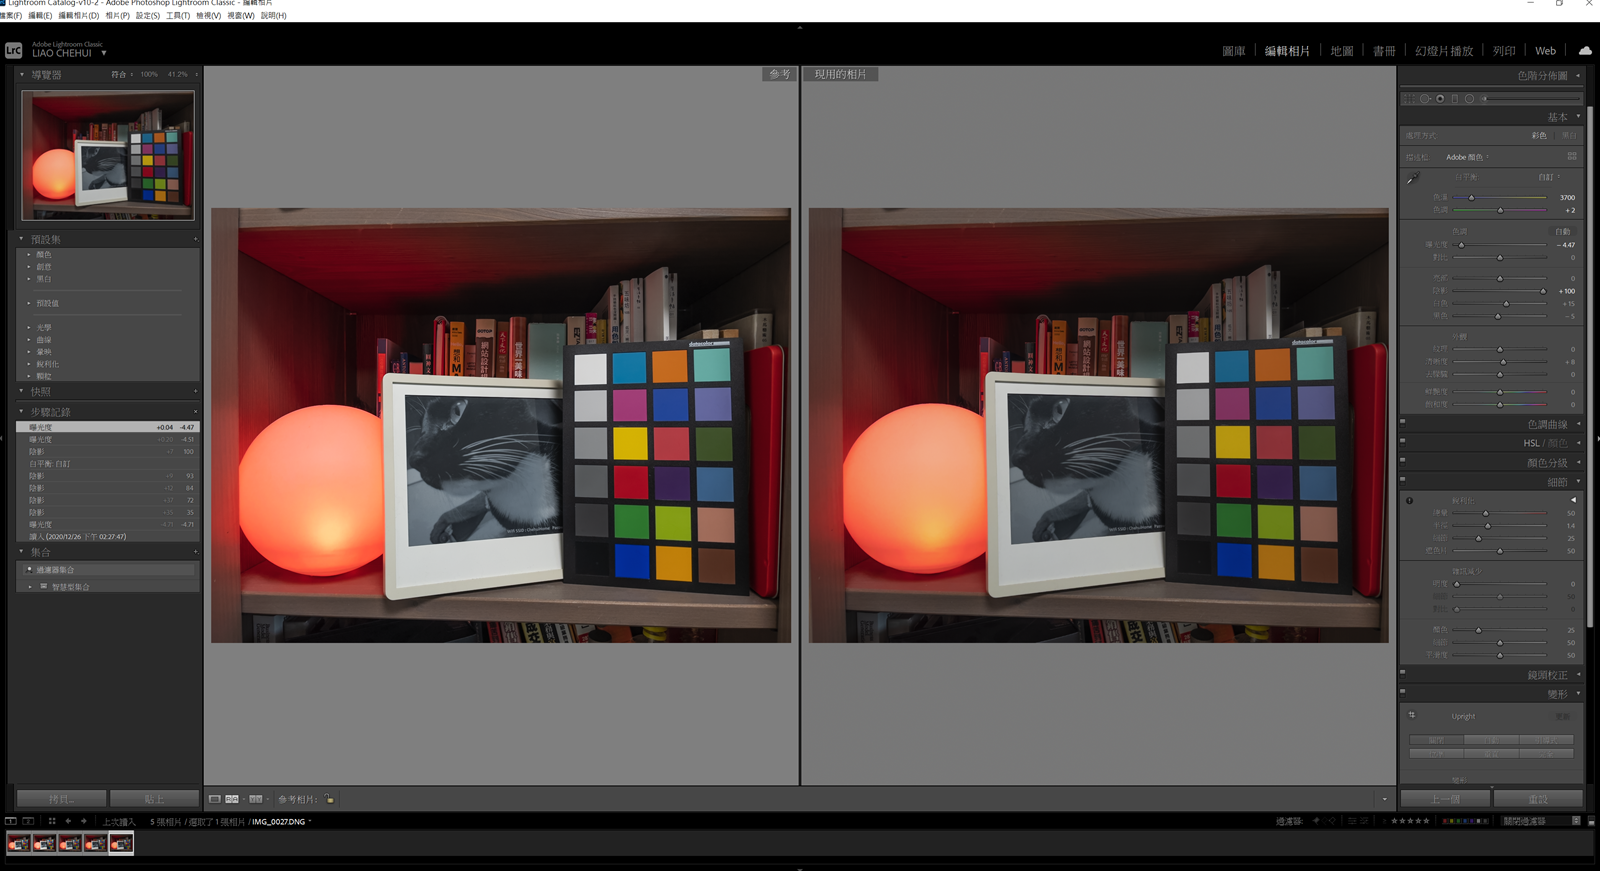 Adobe Lightroom a powerful photo editing tool